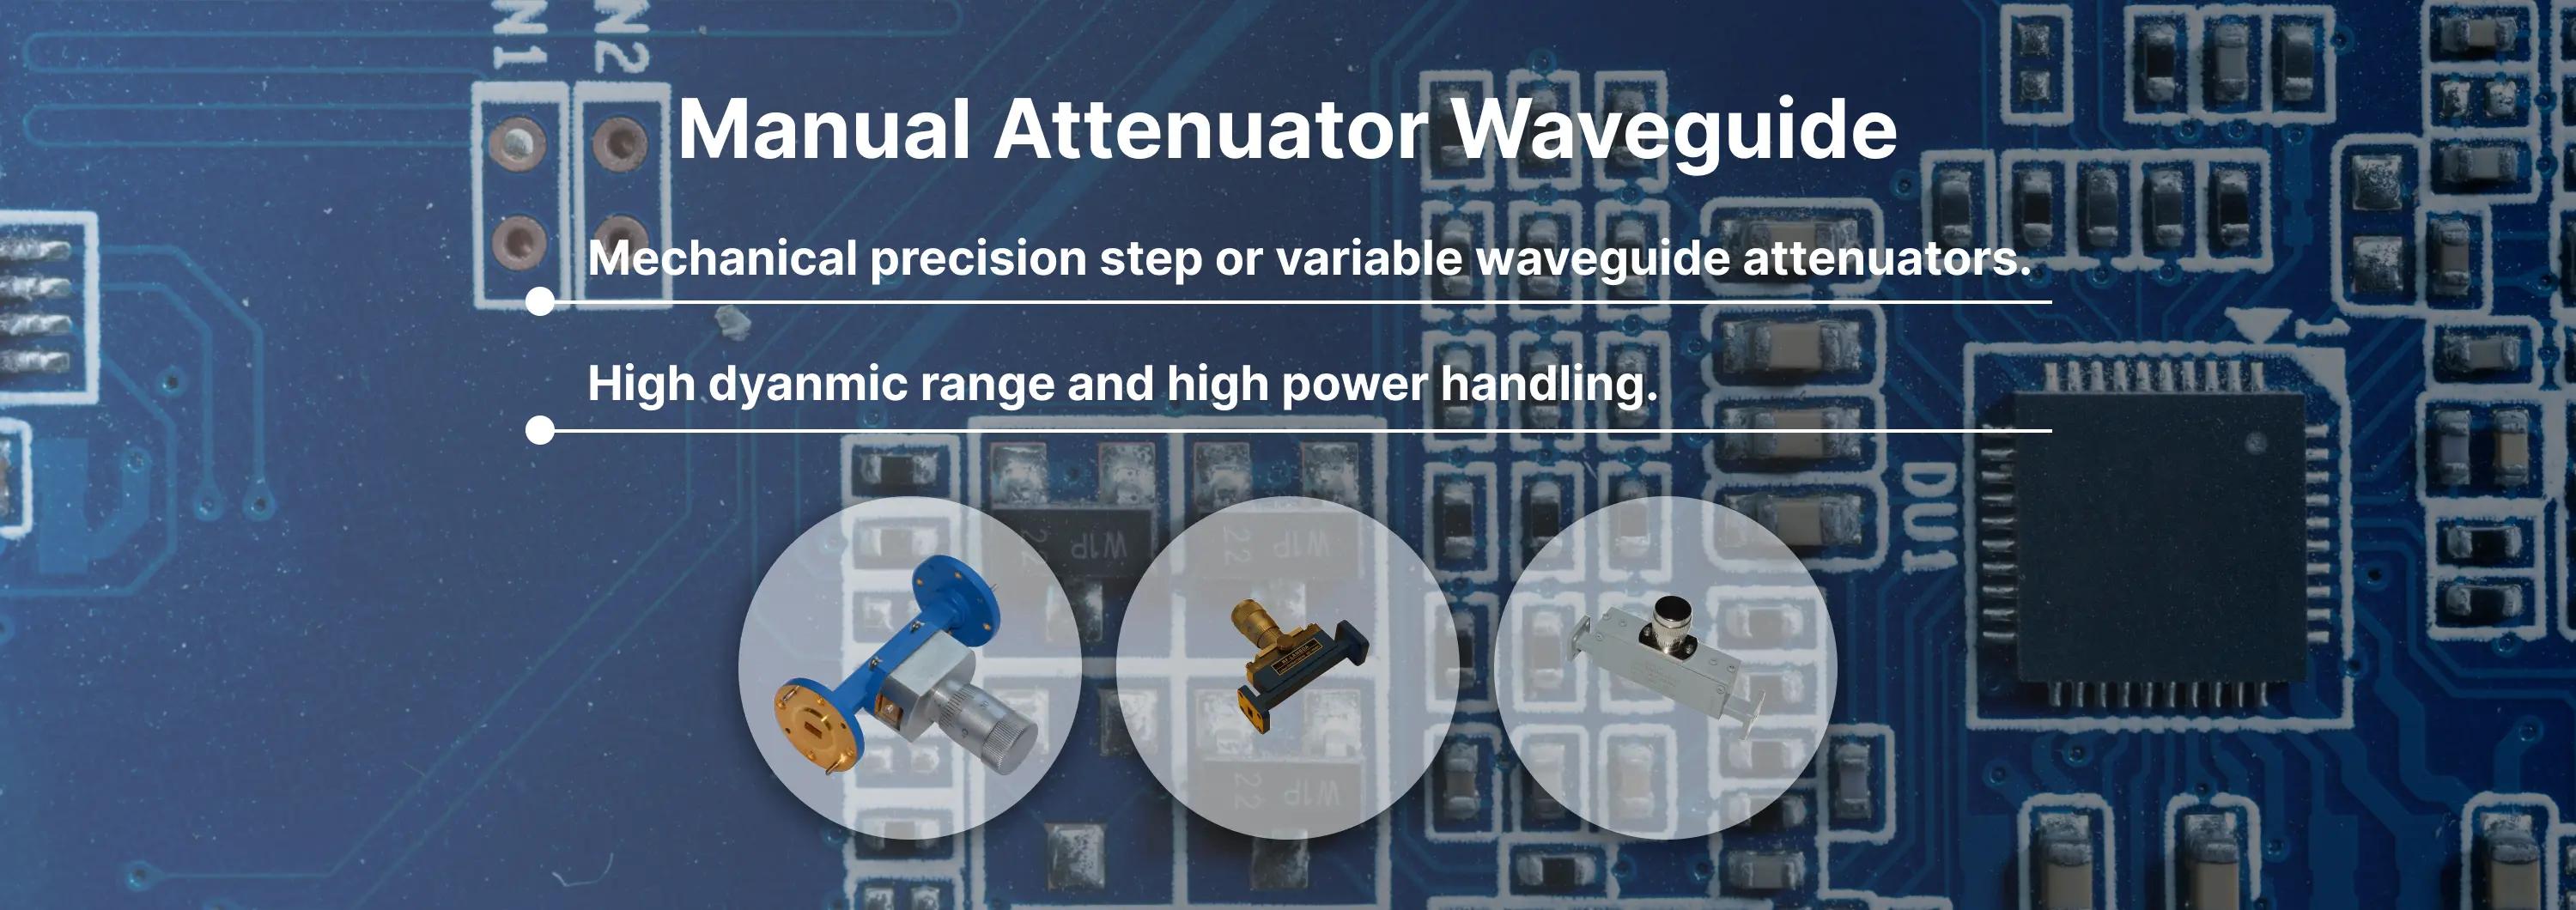 Manual Attenuator (Waveguide) Banner